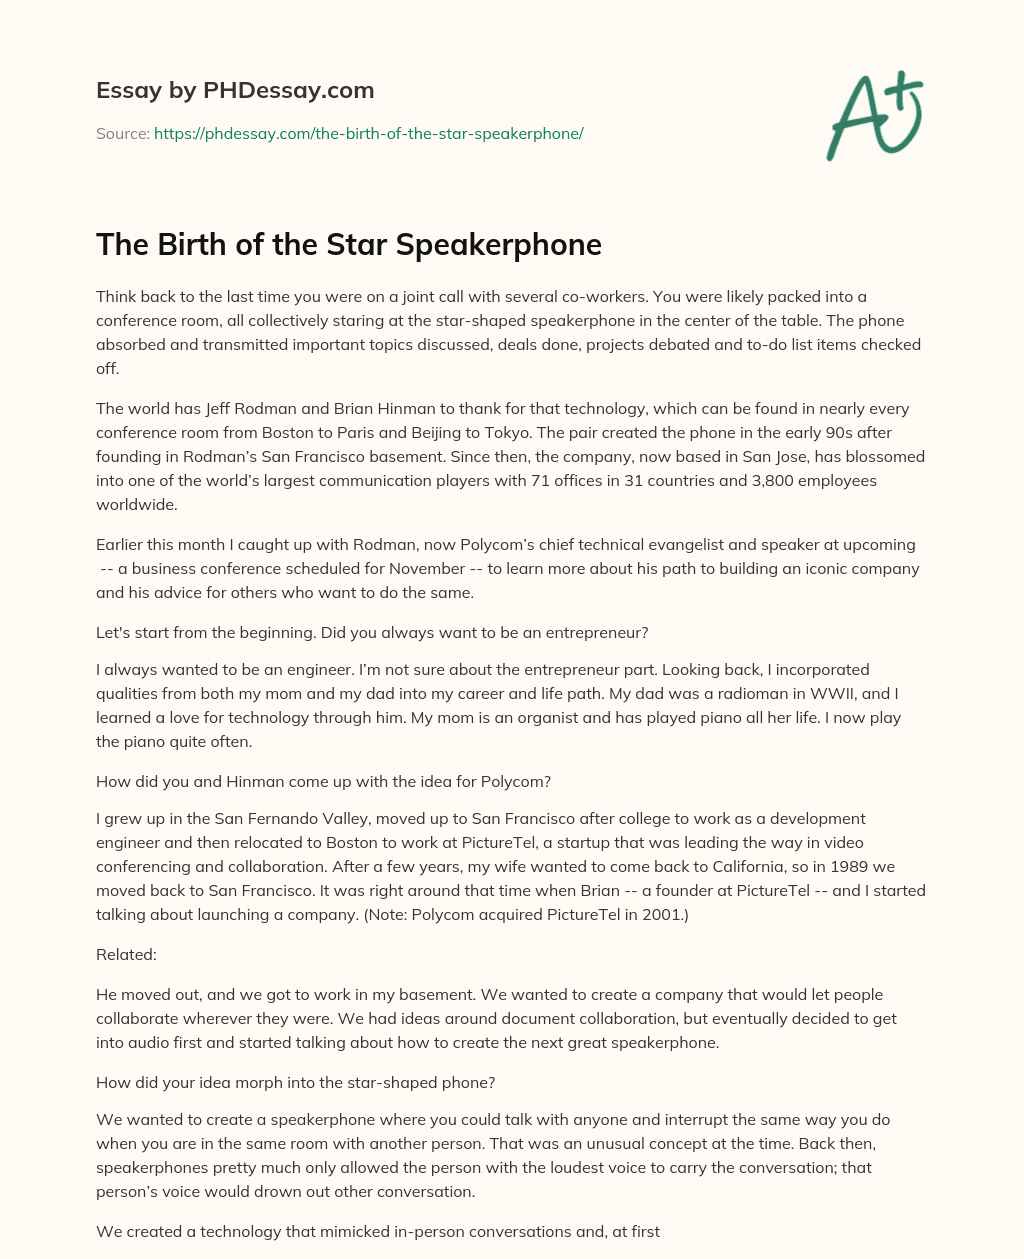 The Birth of the Star Speakerphone essay